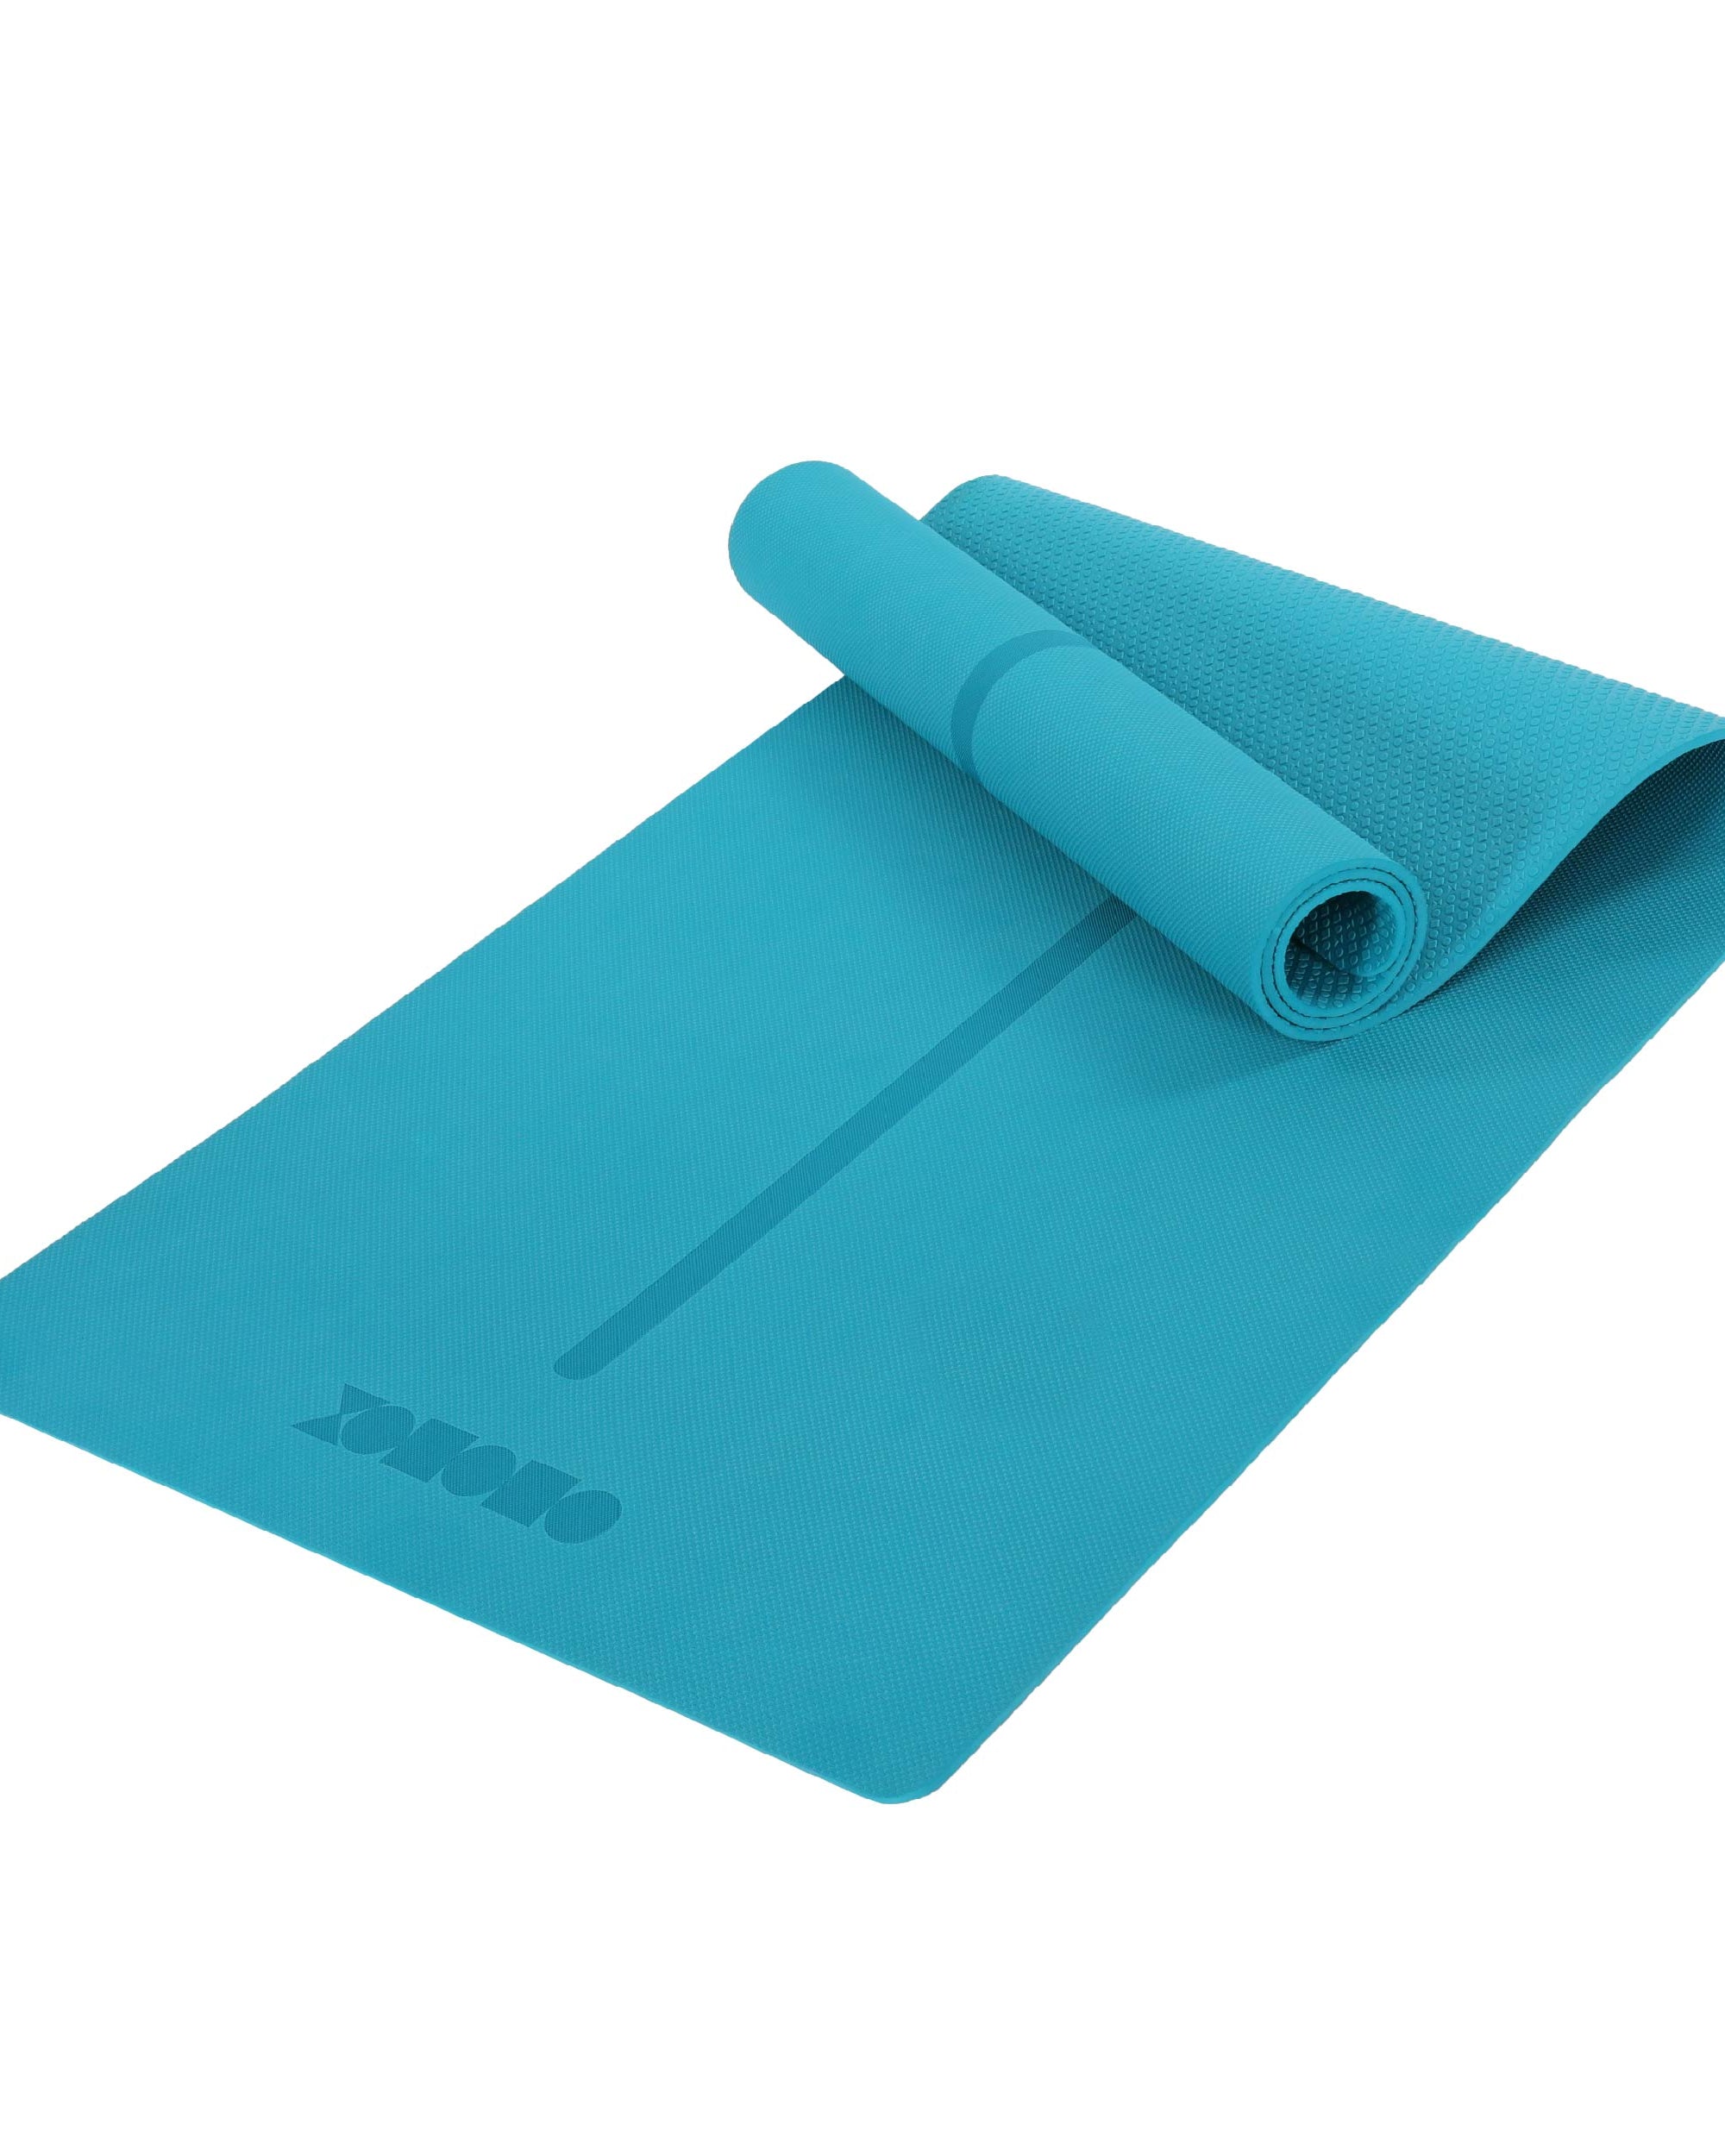 Eco-friendly TPE non-slip sports fitness yoga mat SeaBlue - ododos